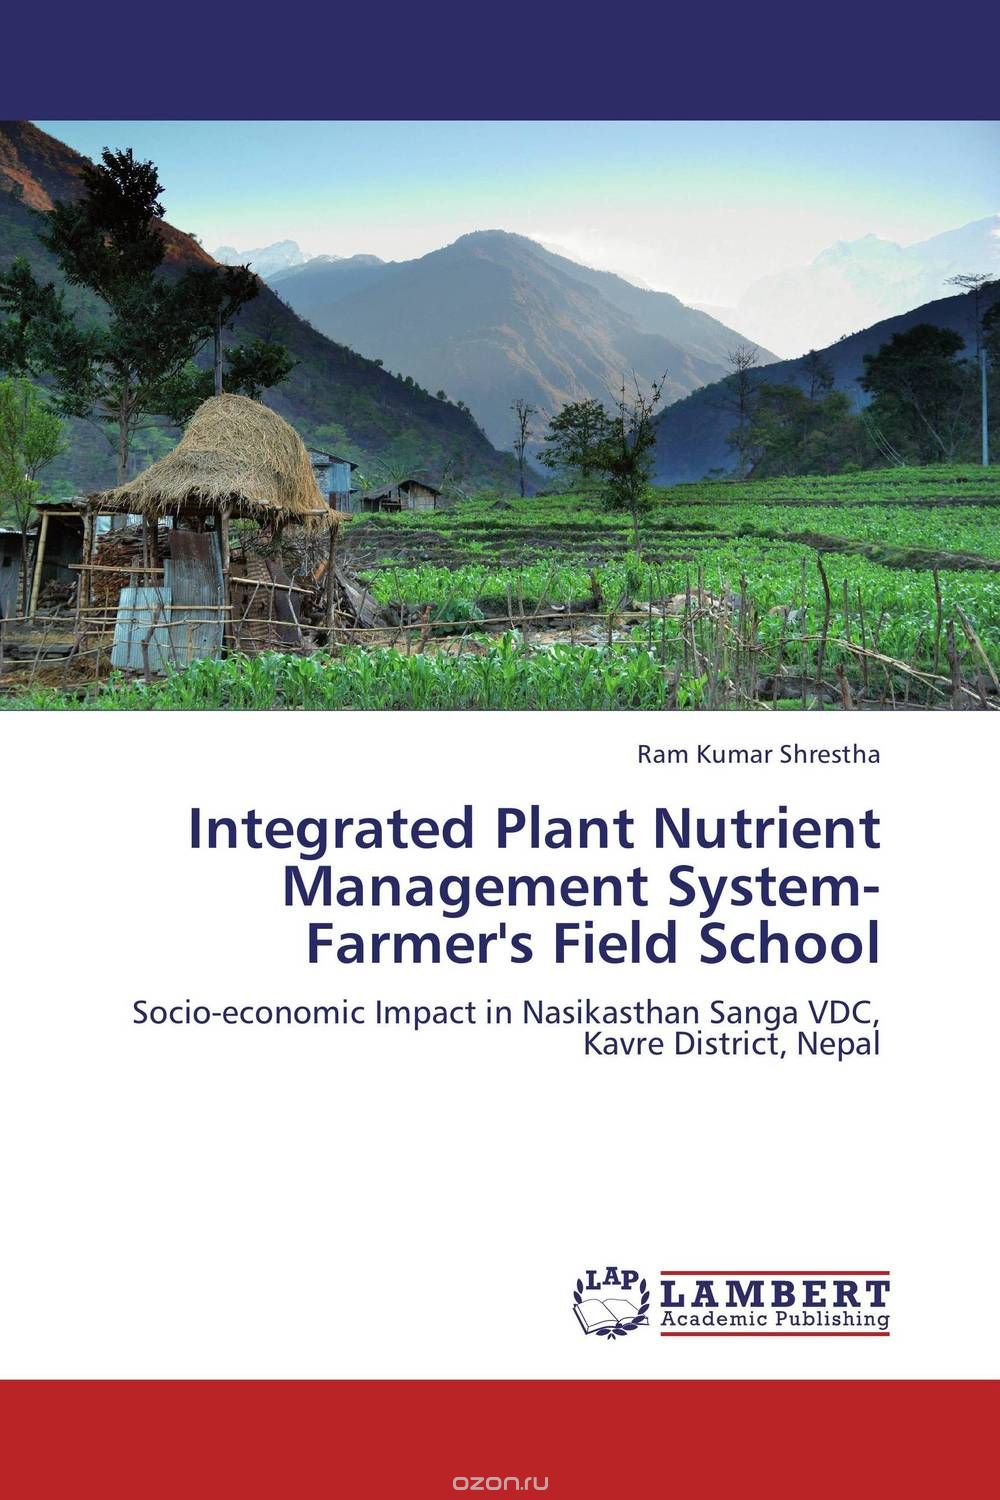 Скачать книгу "Integrated Plant Nutrient Management System-Farmer's Field School"